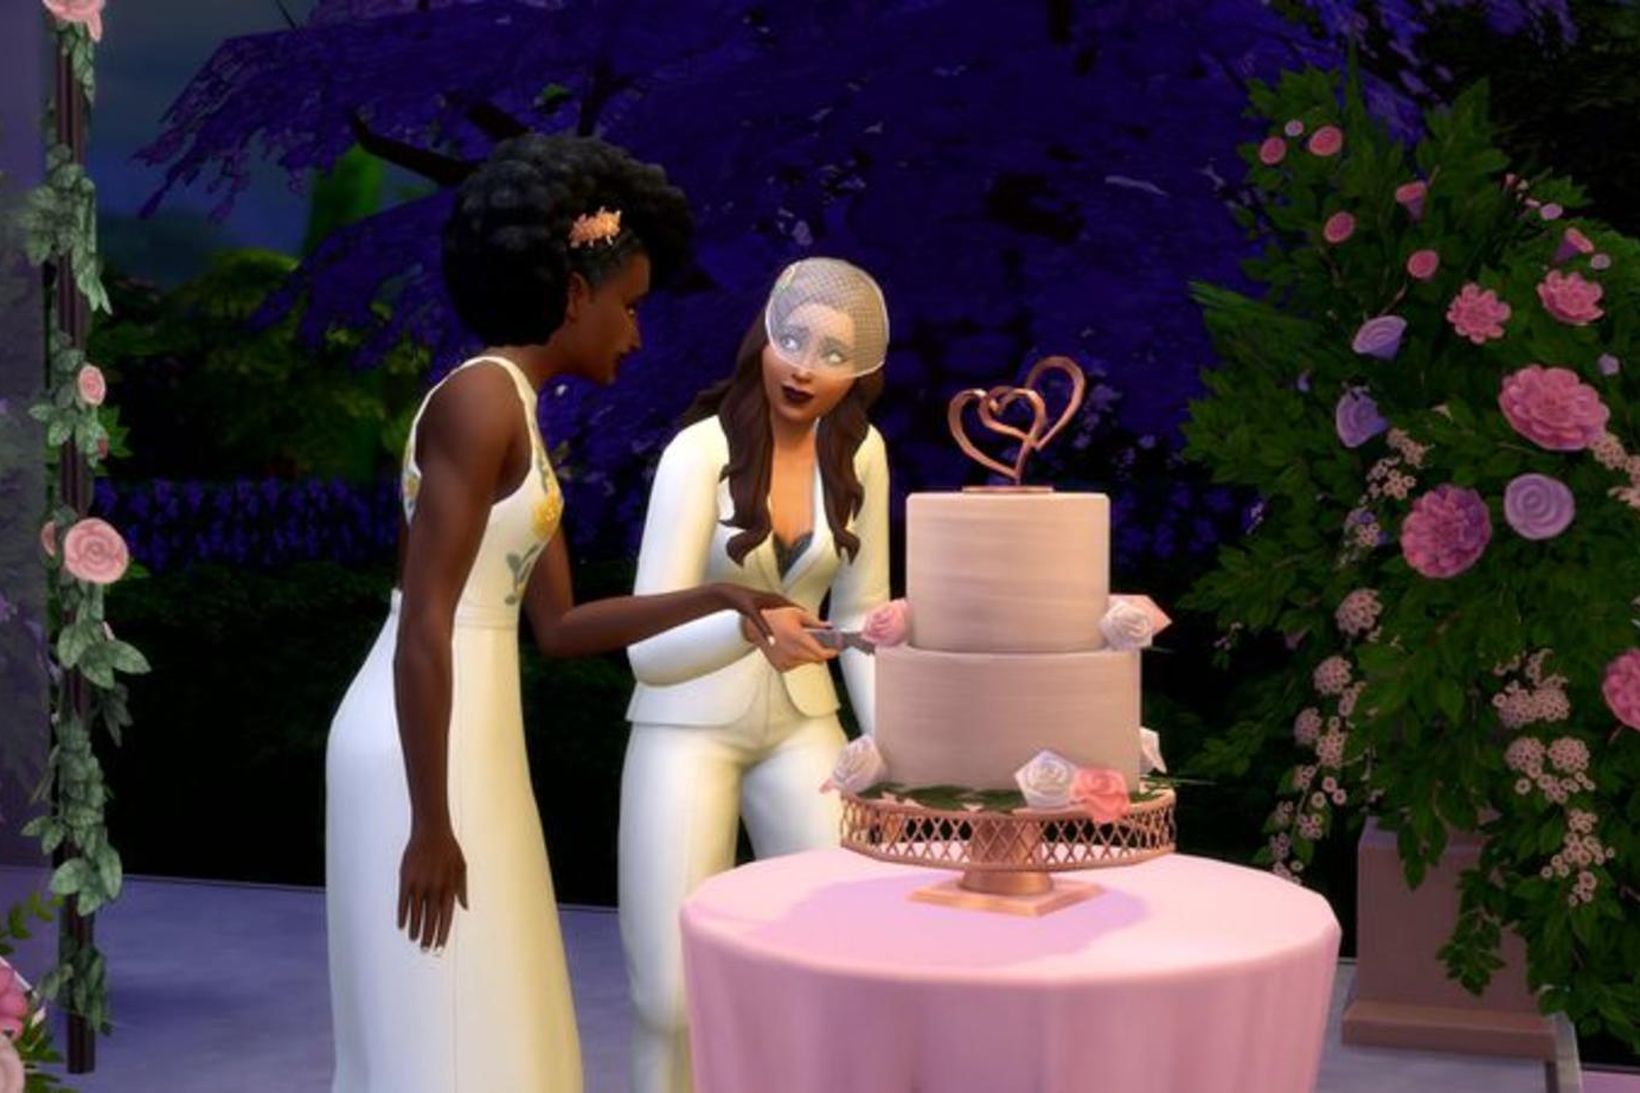 Sims 4 Wedding Stories.